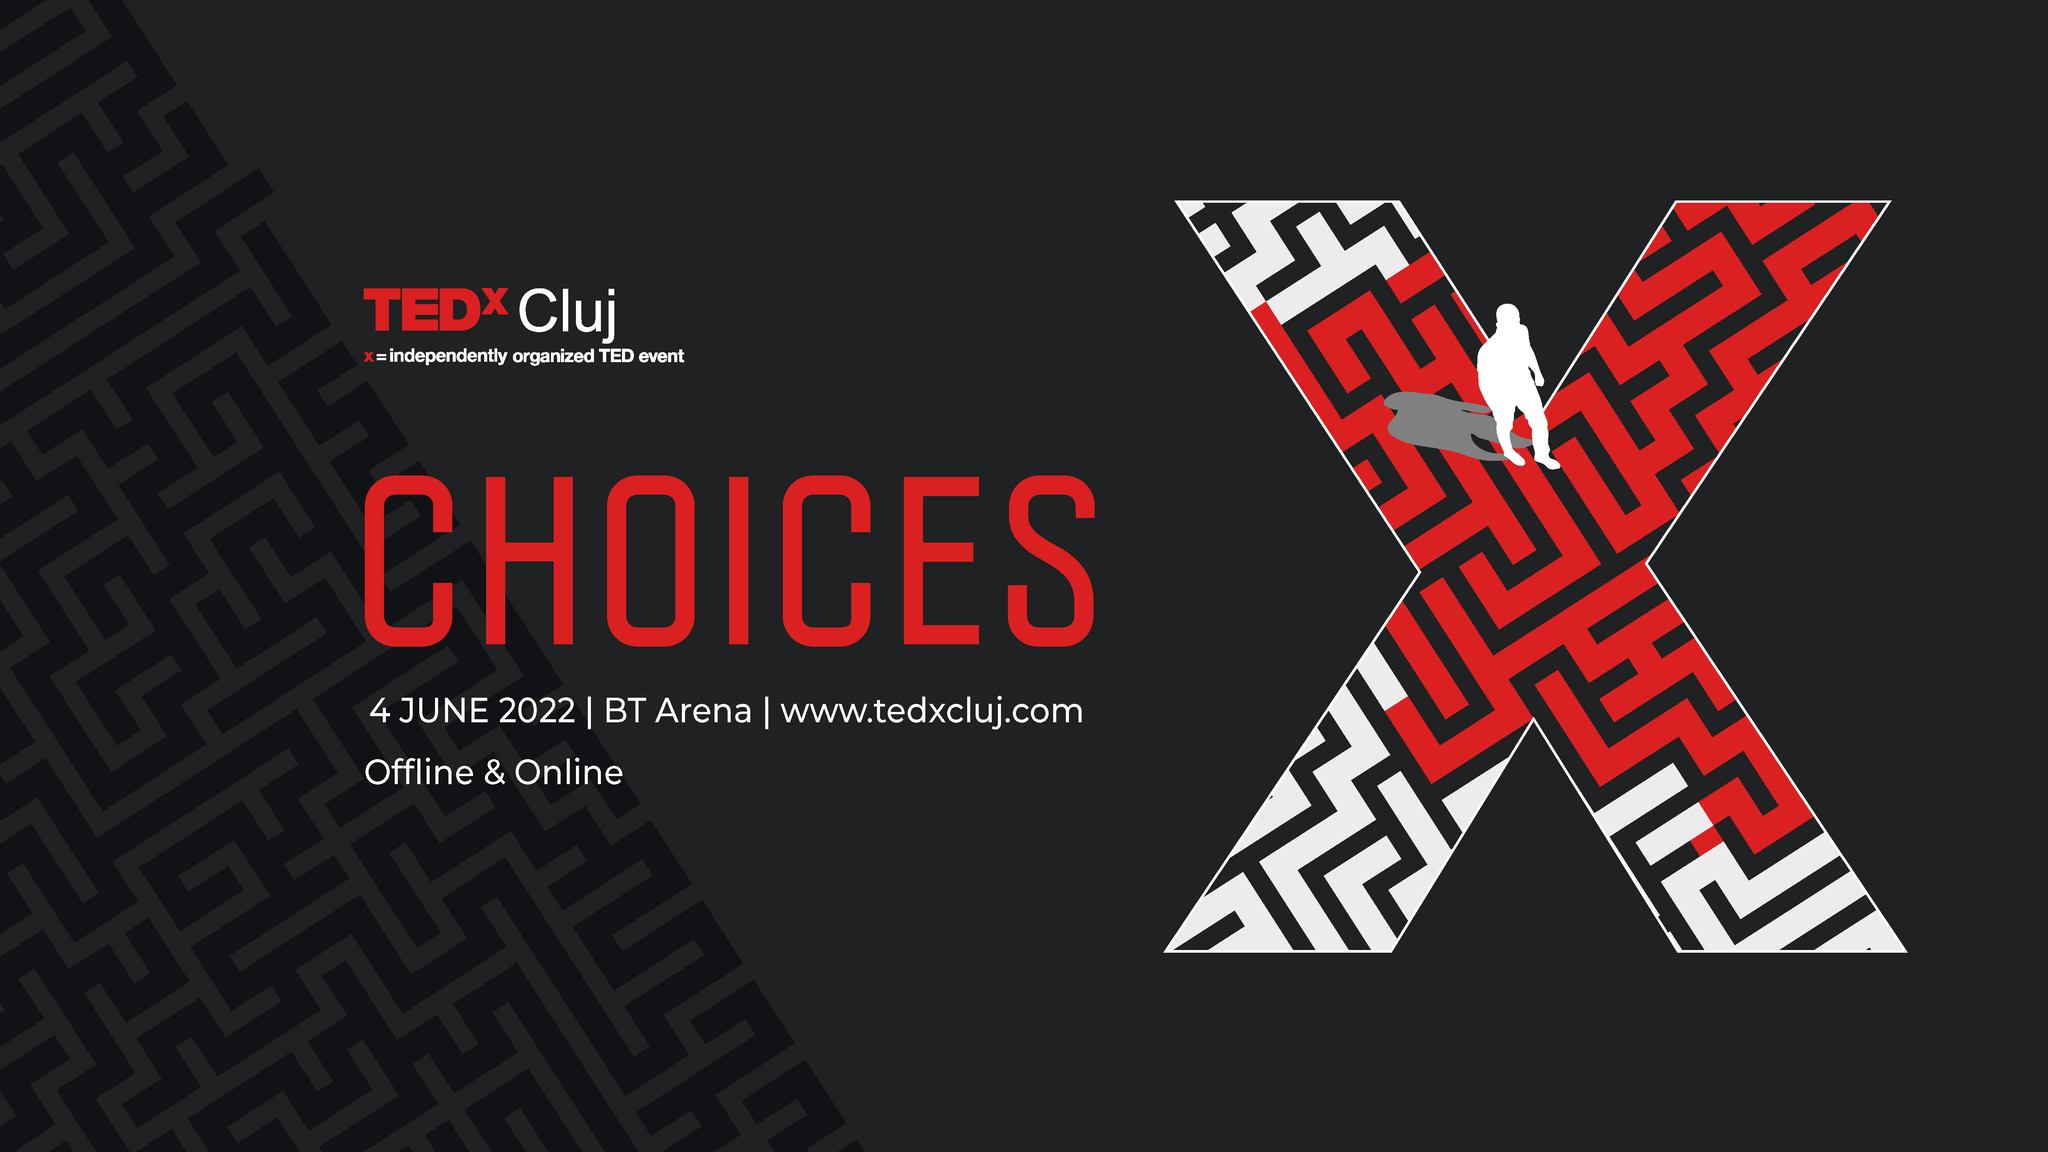 TEDxCluj 2022 - Choices